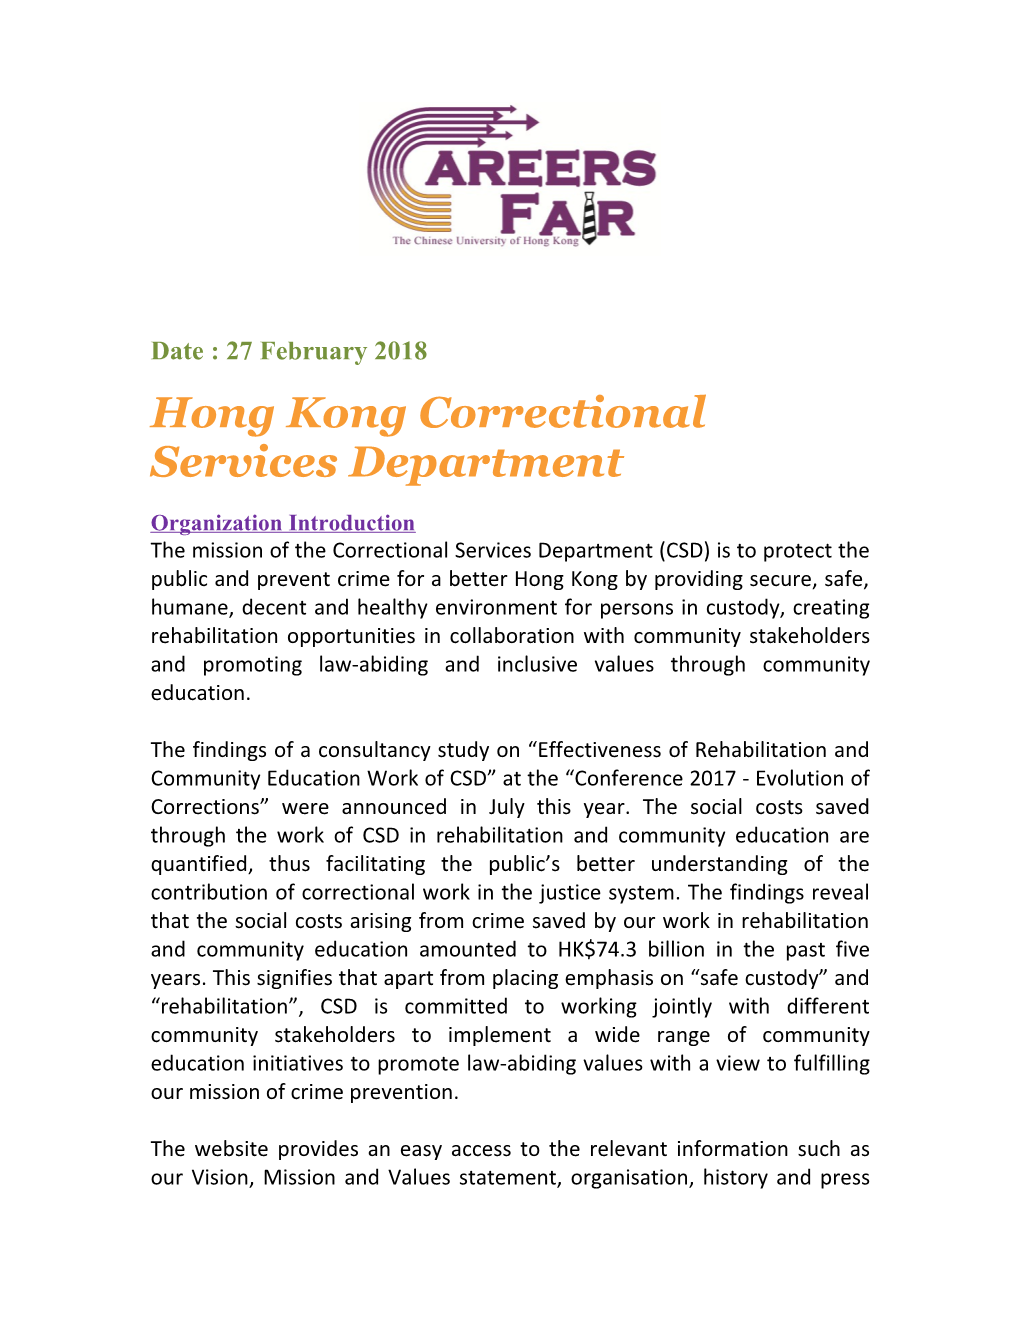 Hong Kong Correctional Services Department